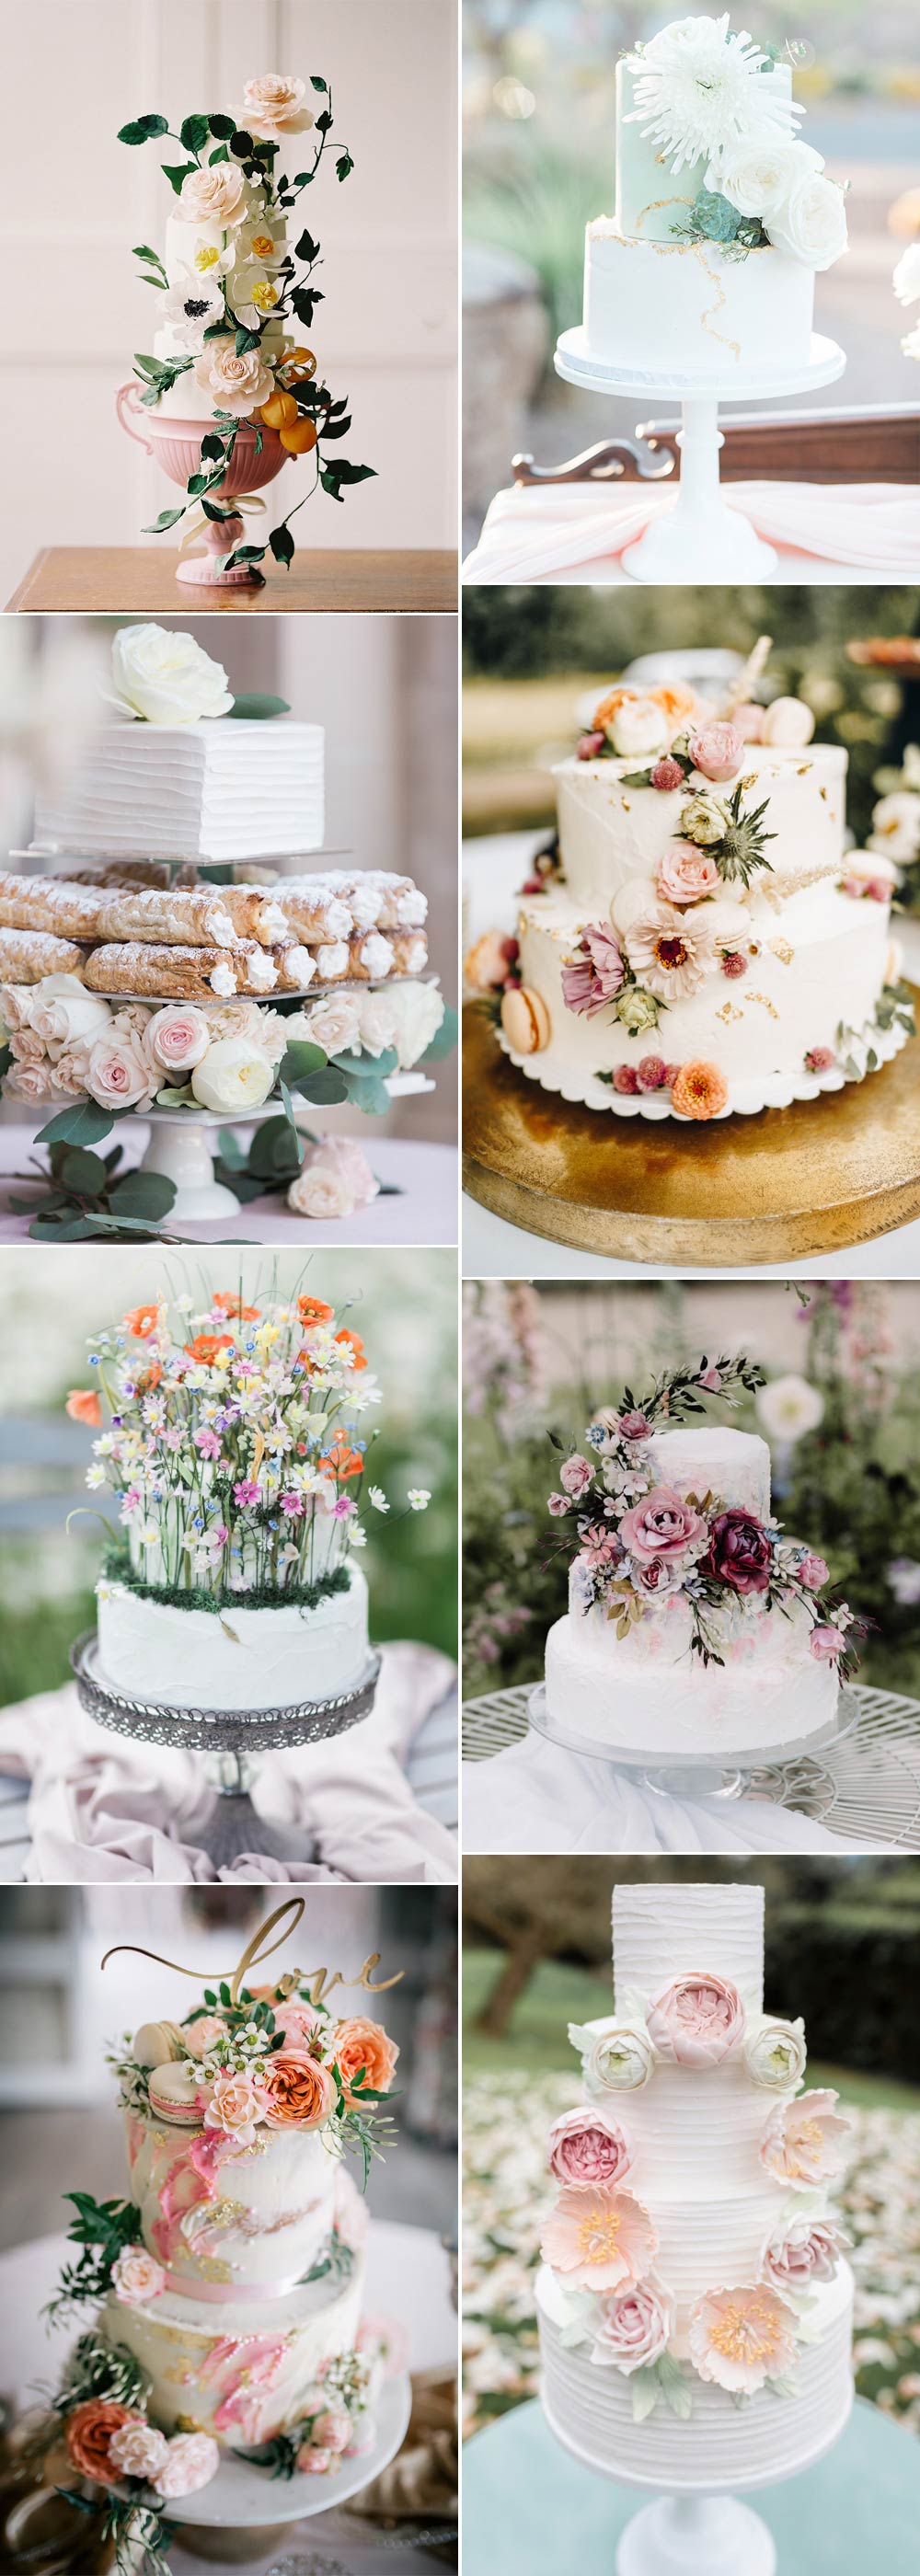 Spring floral wedding cake ideas